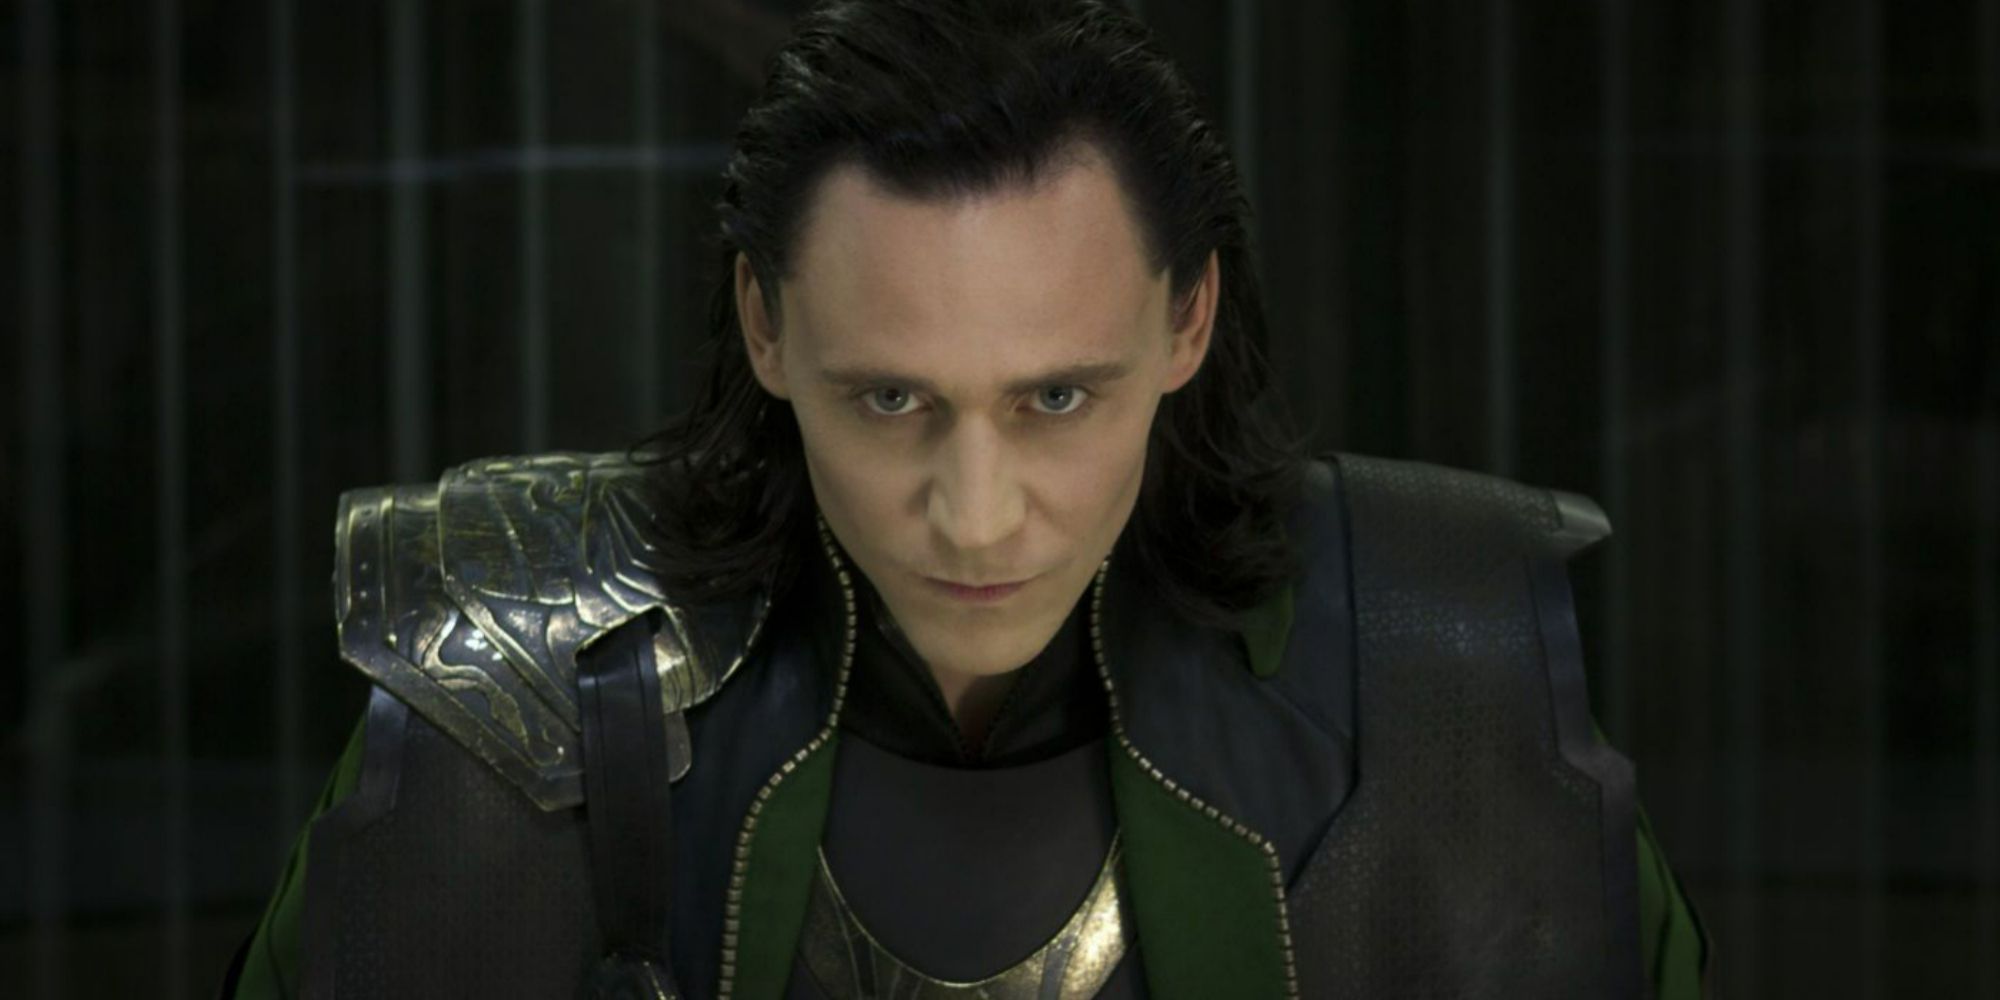 Tom Hiddleston as Loki in The Avengers in the MCU.